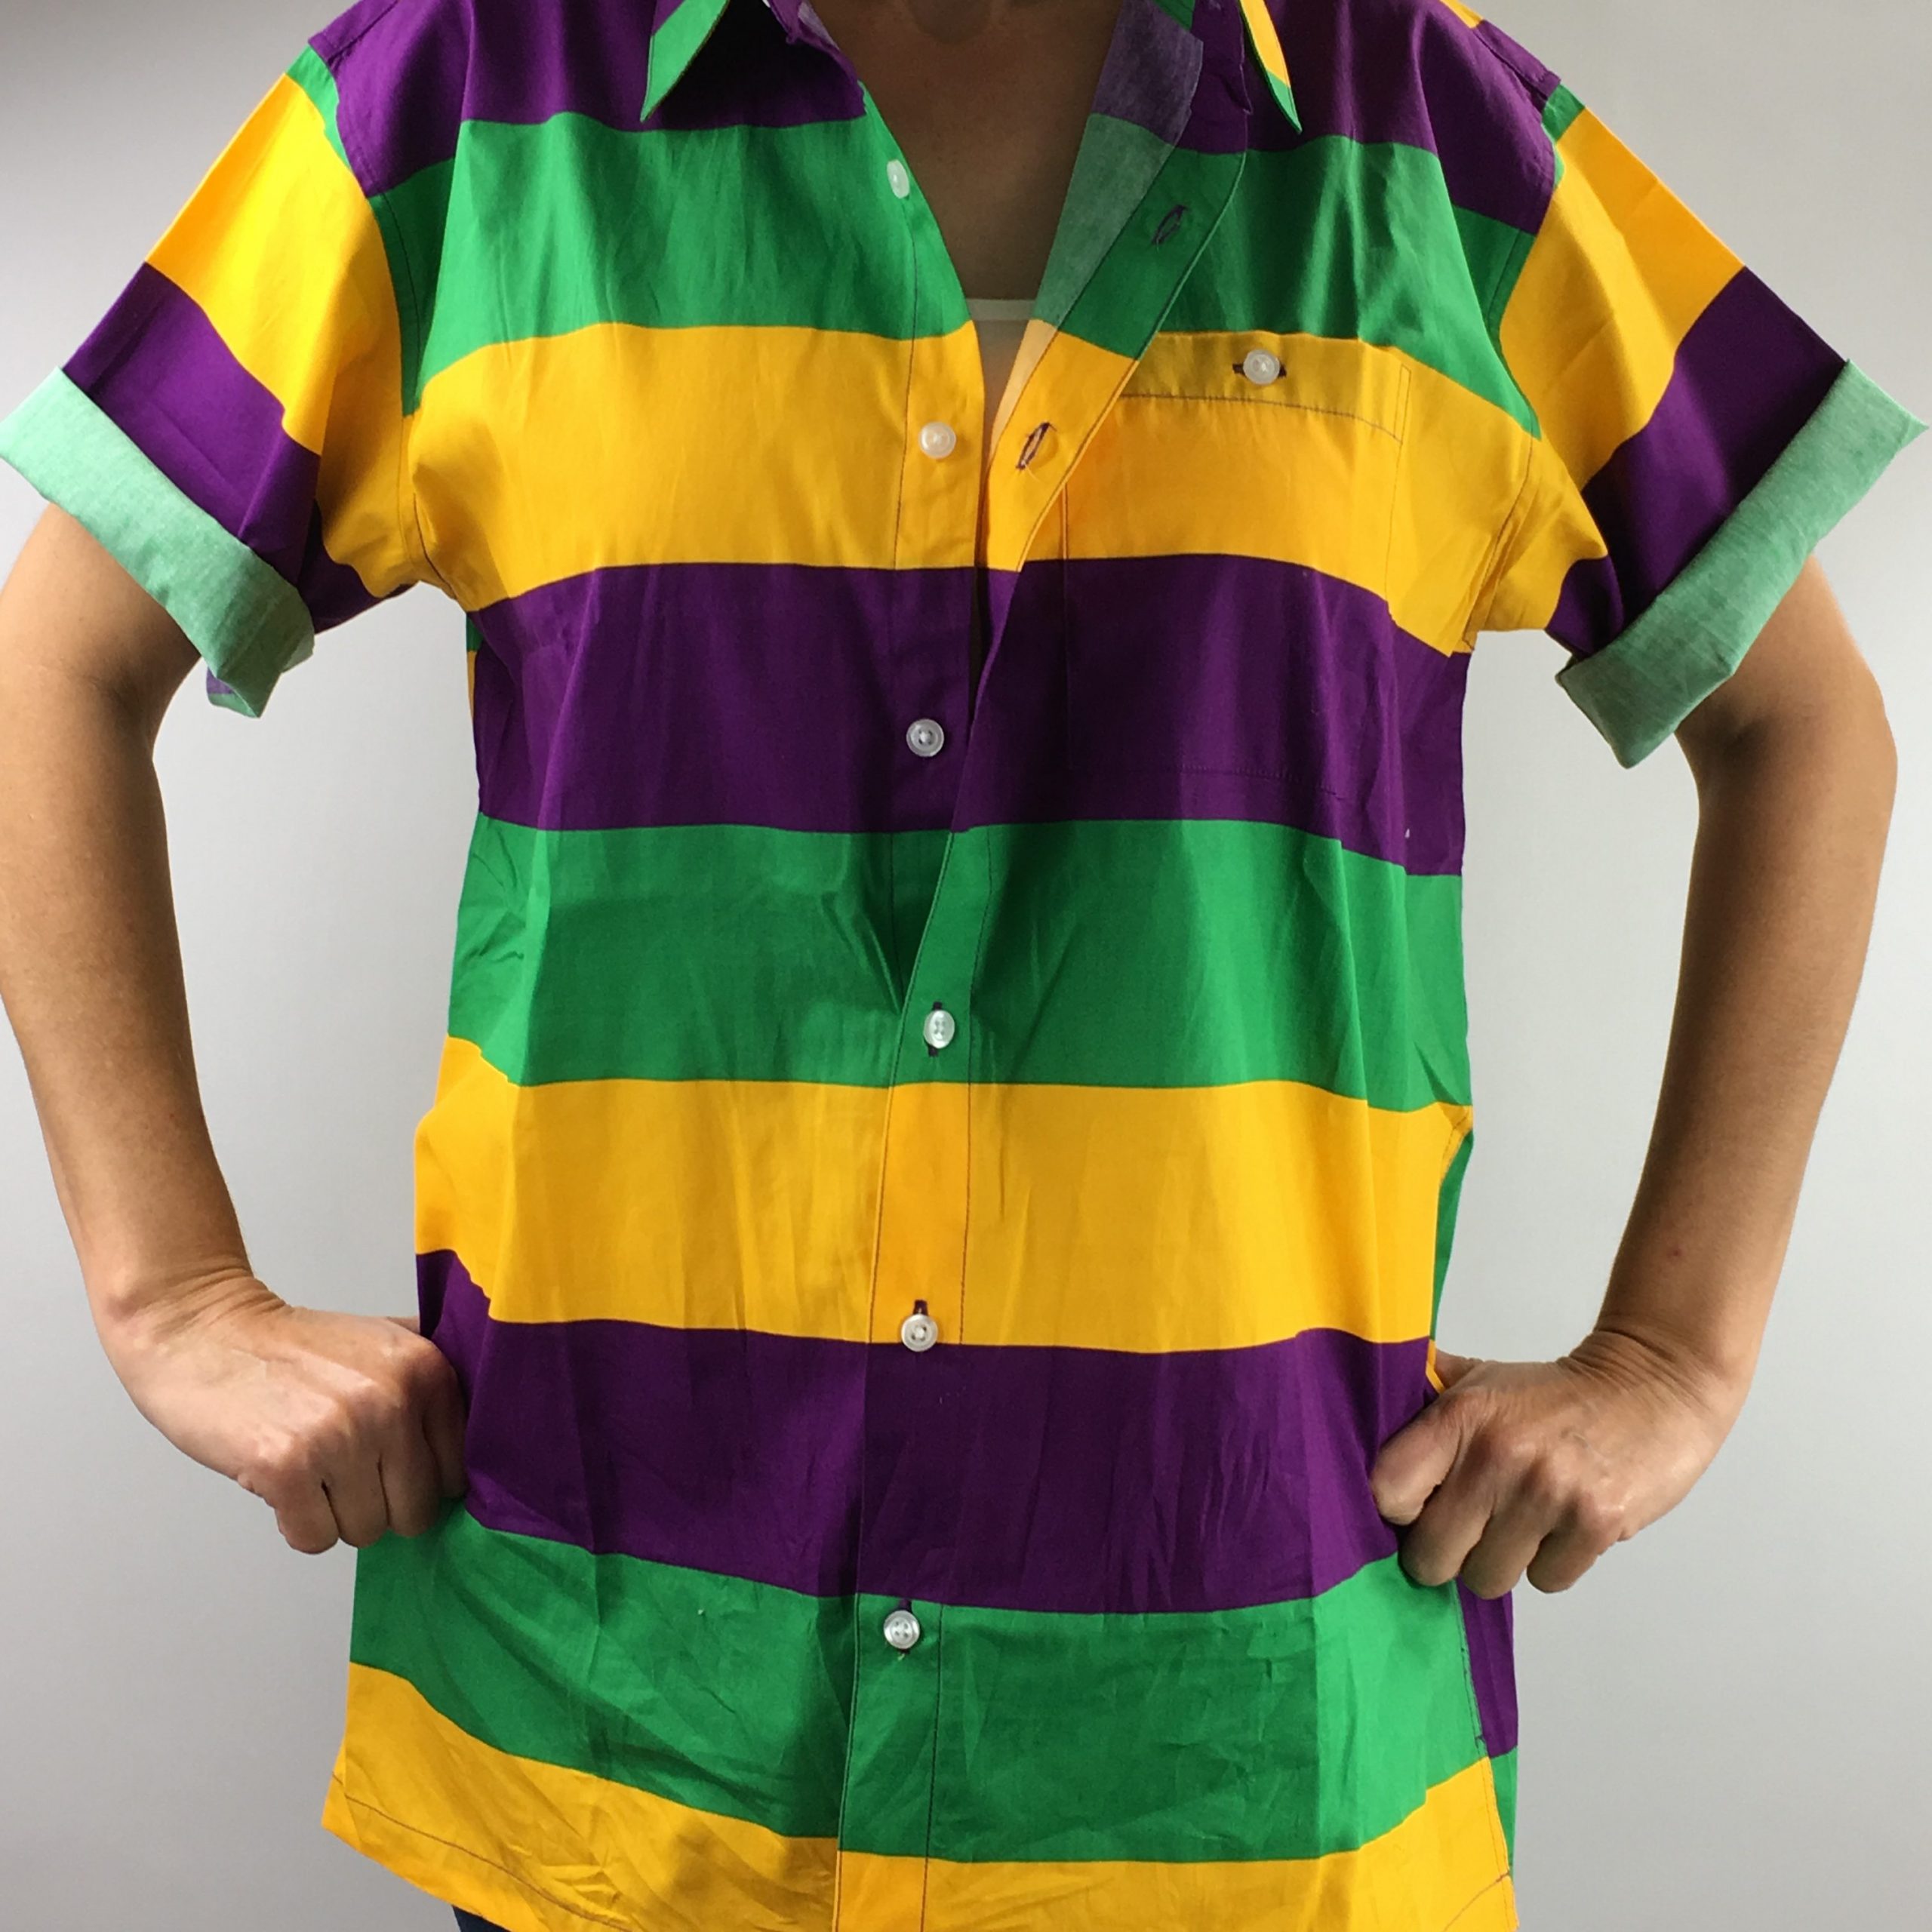 PUTIEN Mardi Gras Girl Regular-Fit Short-Sleeve Shirt,Personality Pattern,Colorful Band